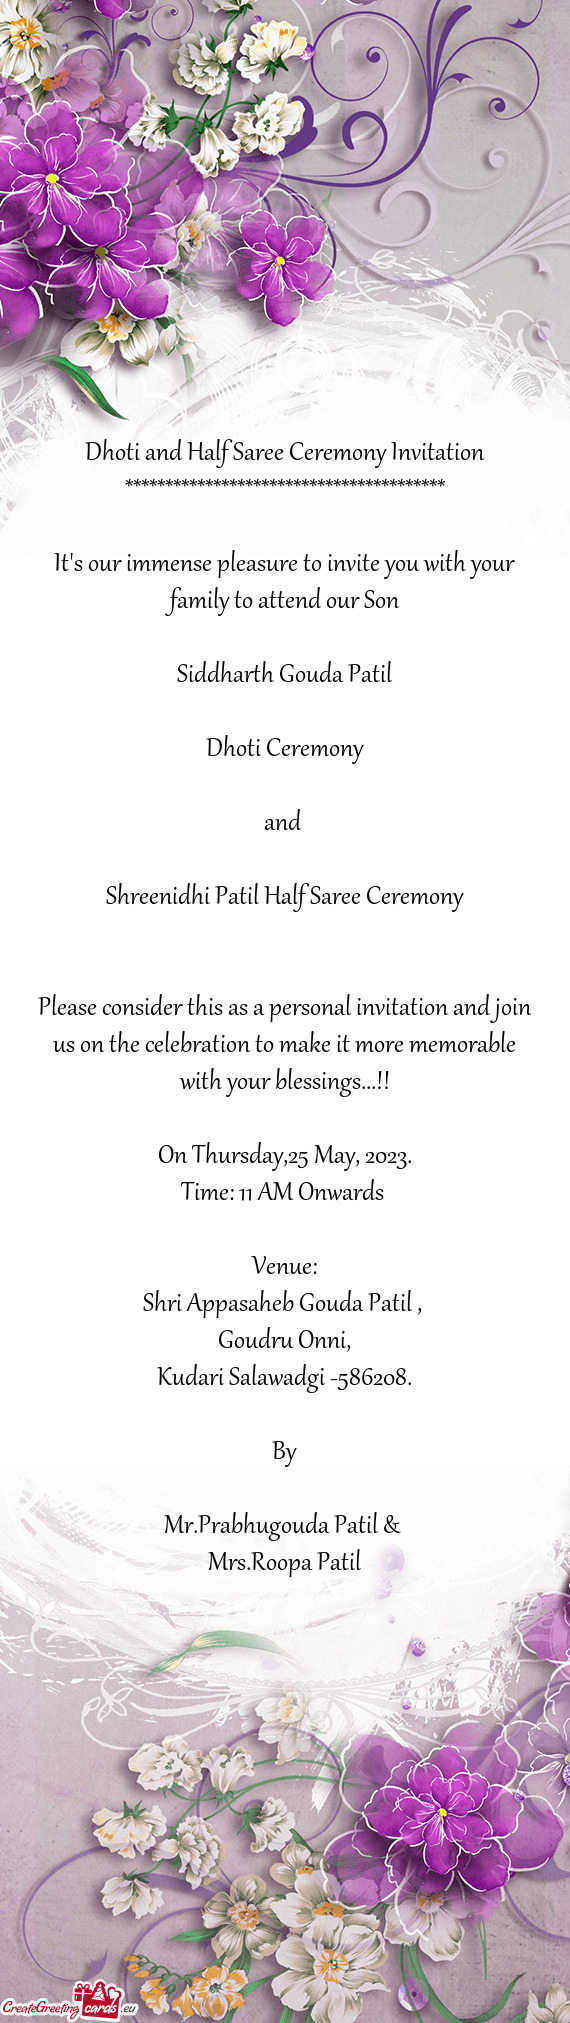 Shreenidhi Patil Half Saree Ceremony